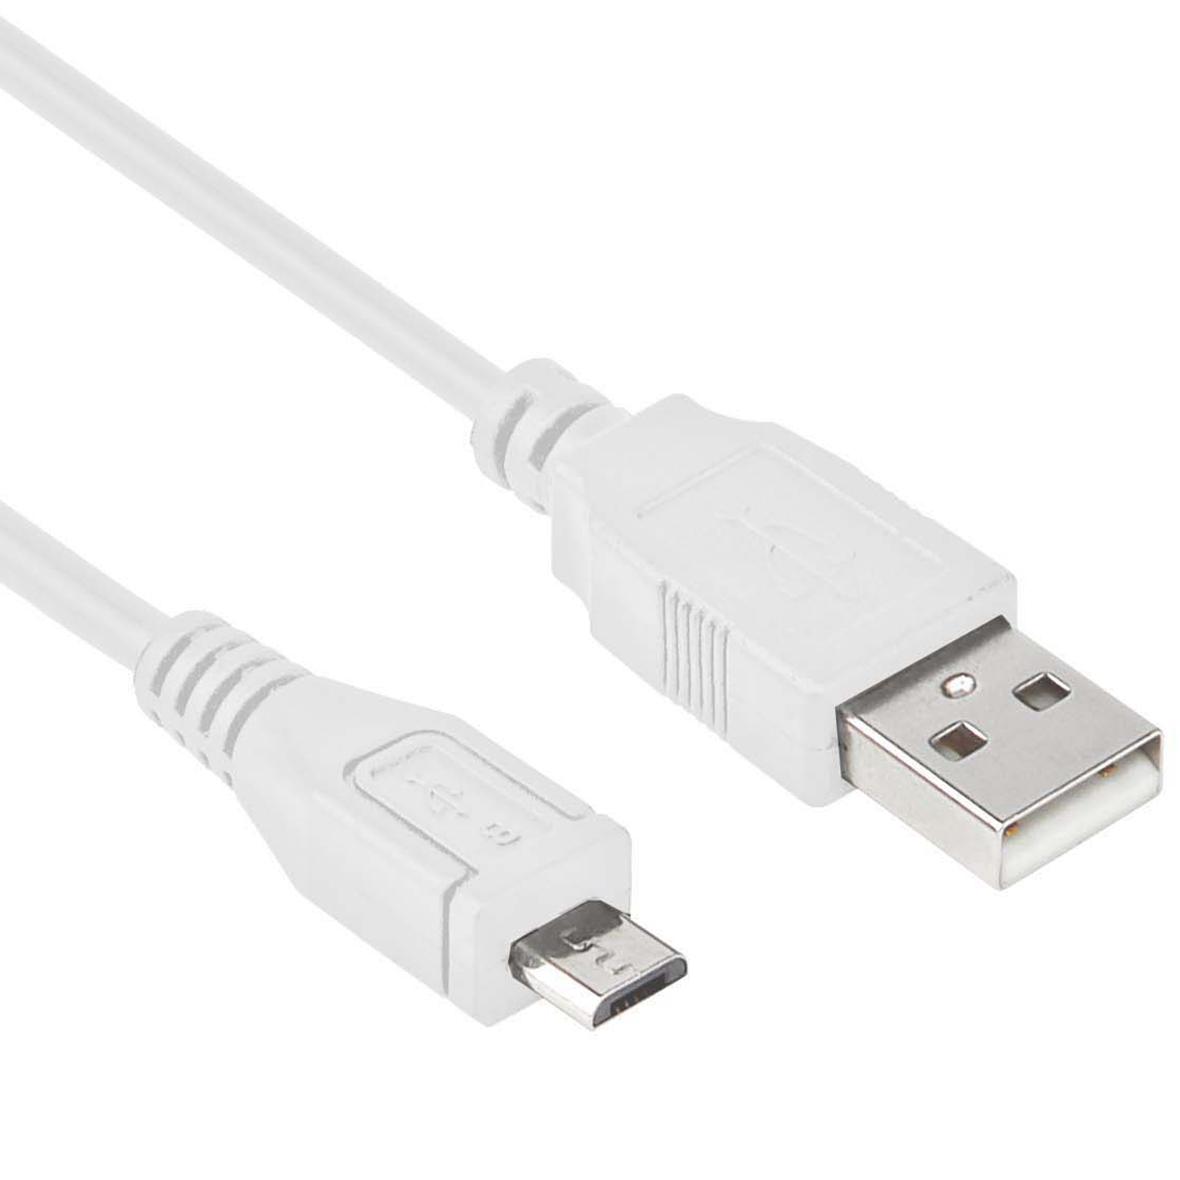 Politieagent Openlijk straal USB 2.0 A naar Micro B Kabel - Micro USB 2.0 kabel, Connector 1: USB A  male, Connector 2: Micro USB B male, Kleur: Wit, 1 meter